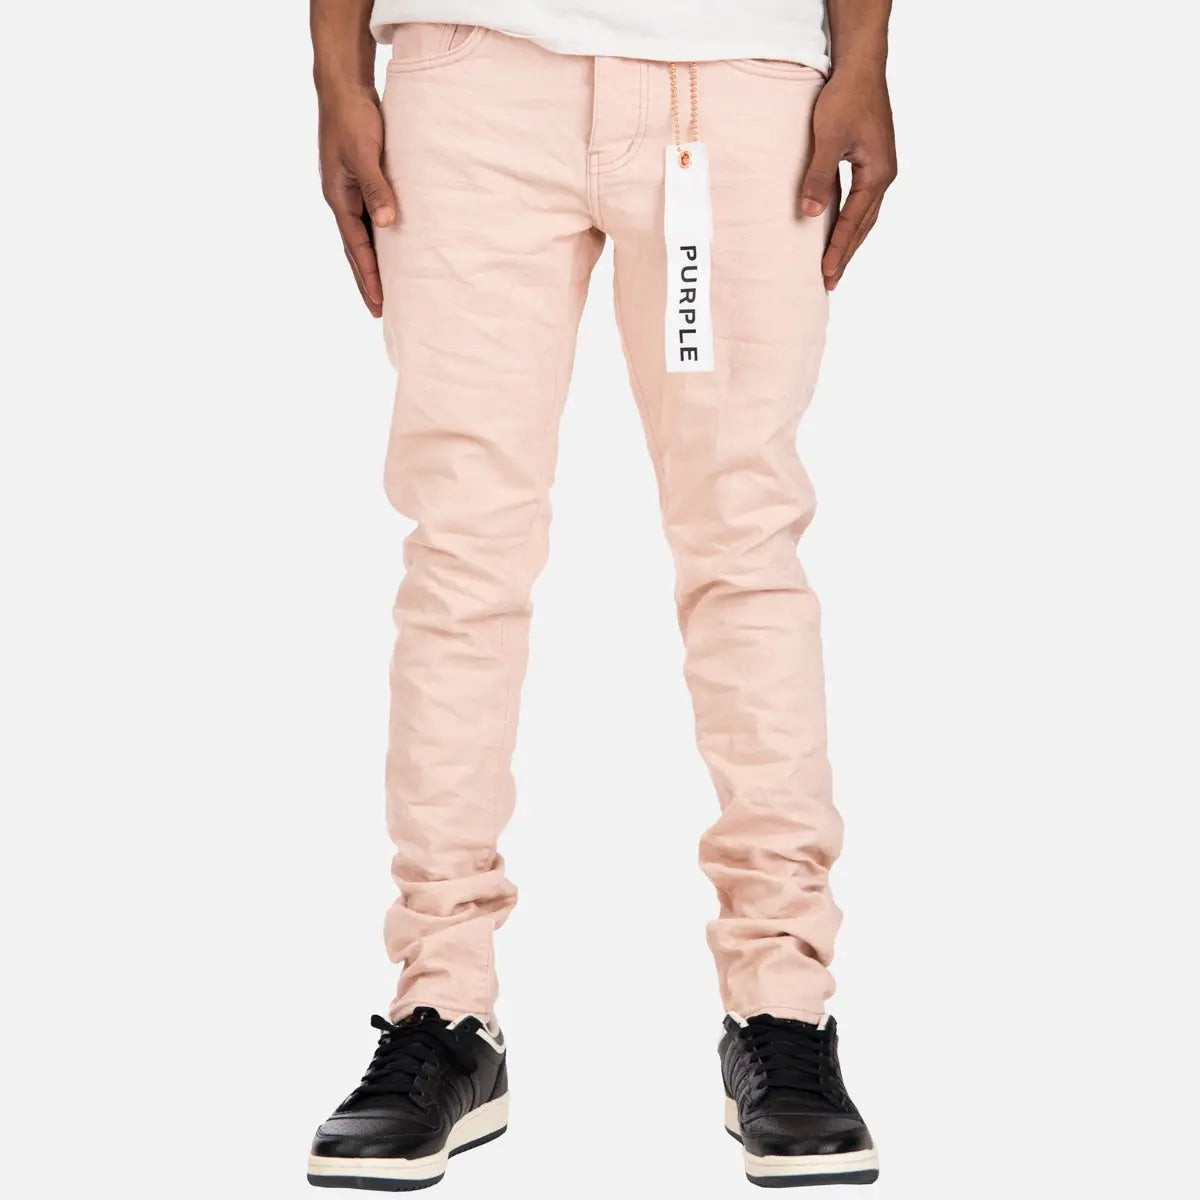 $413 Purple Brand Men's Relaxed-Fit Purple Denim Jeans Pants Size